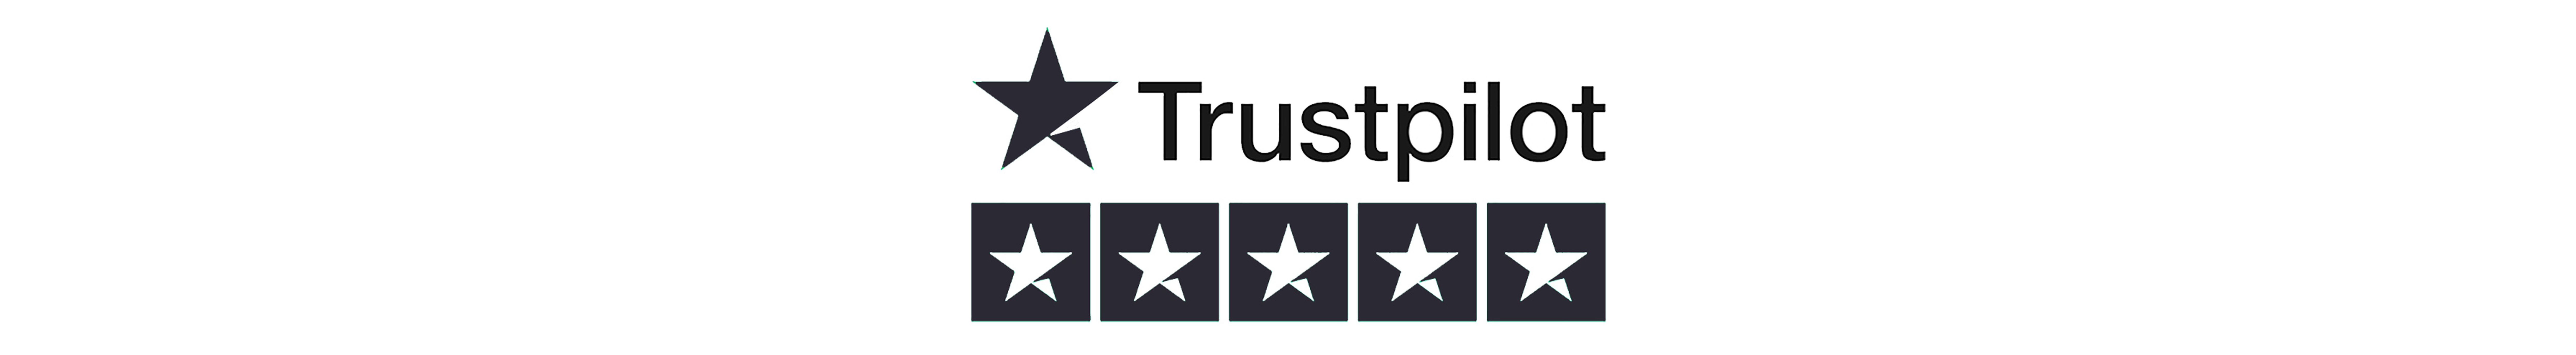 Trustpilot Banner Homepage PC